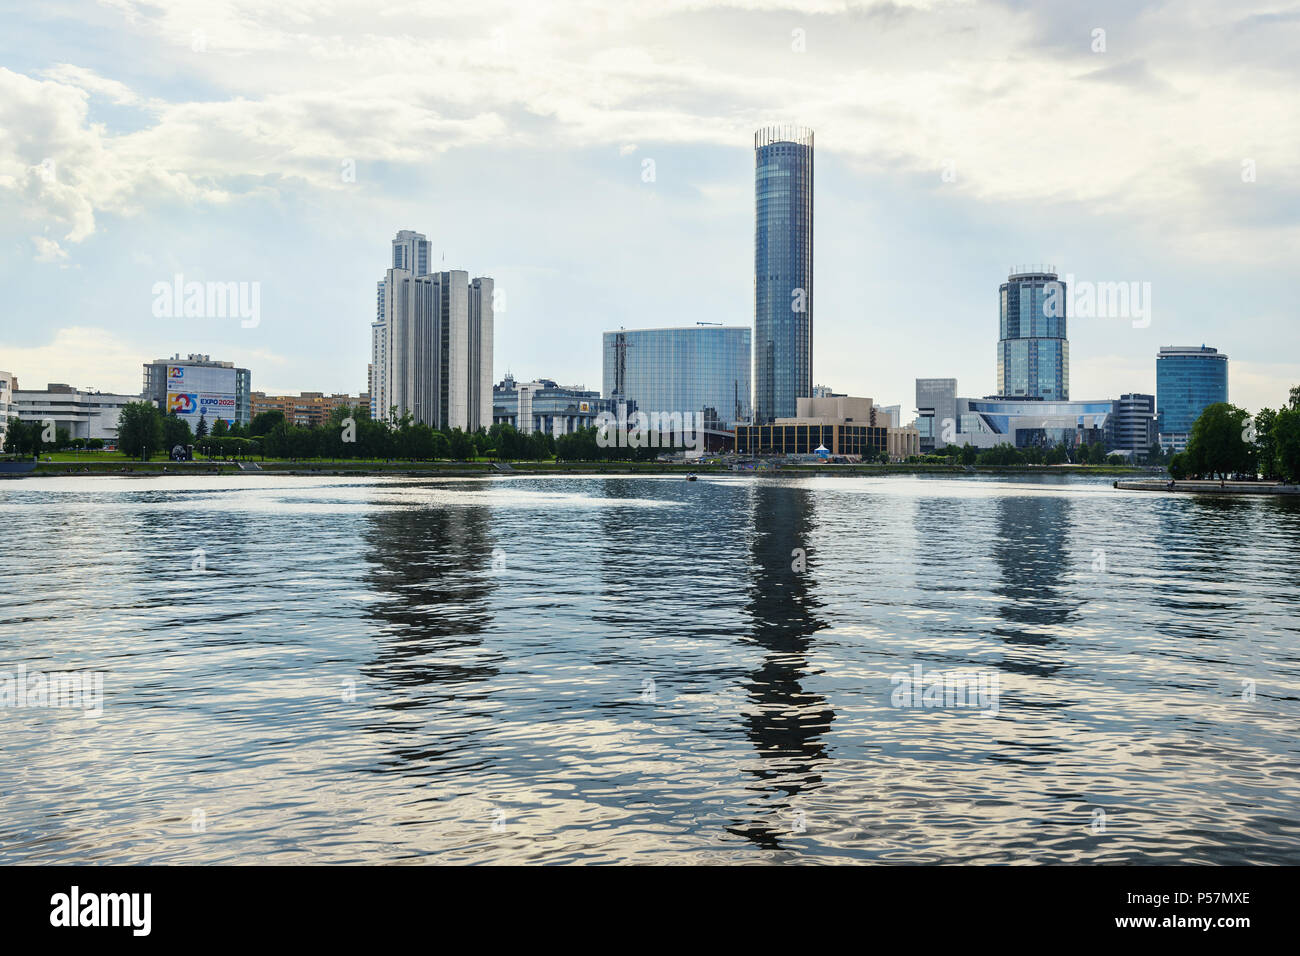 Yekaterinburg, Russia - June 21, 2018: View of city center skyline and Iset river Stock Photo